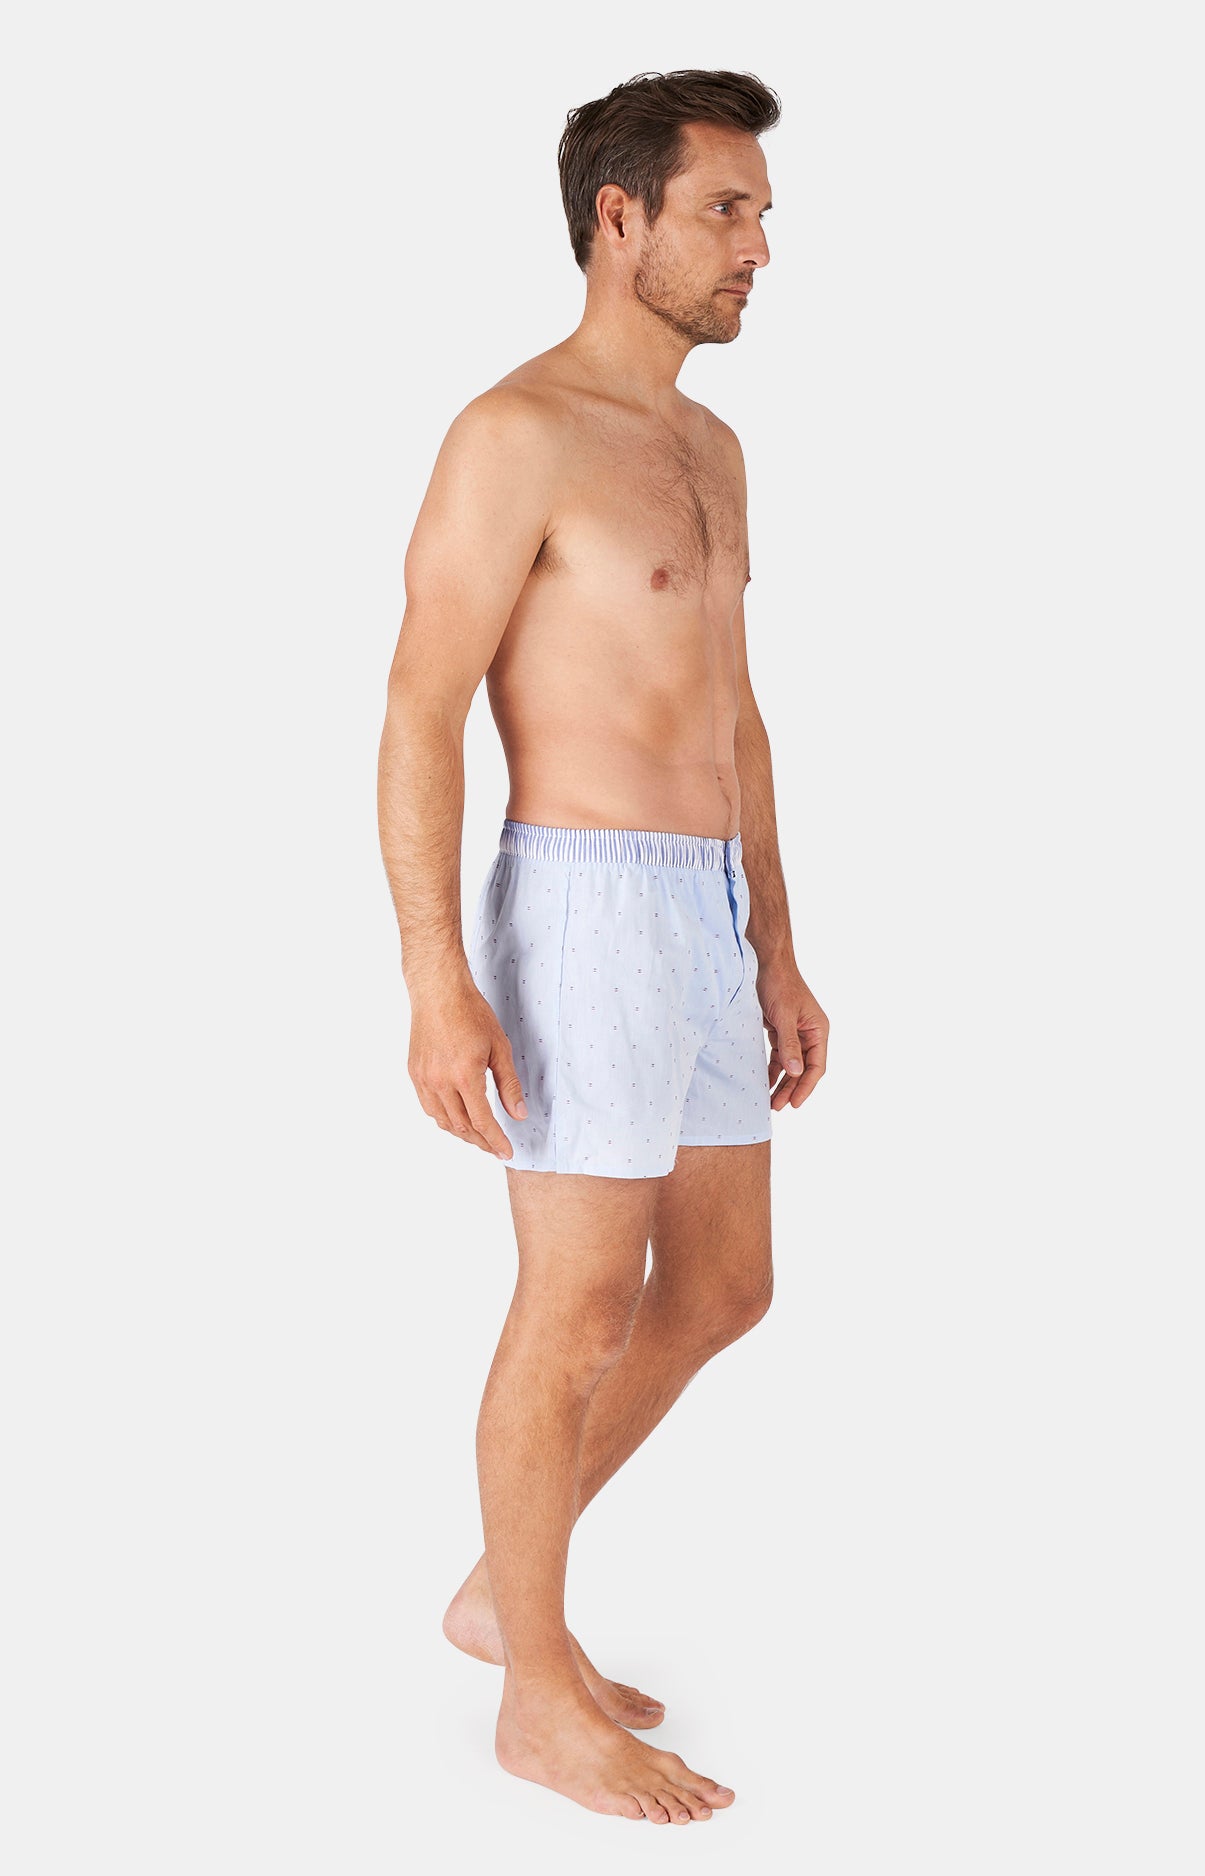 Boxer shorts with jockstrap - Le Club n°006